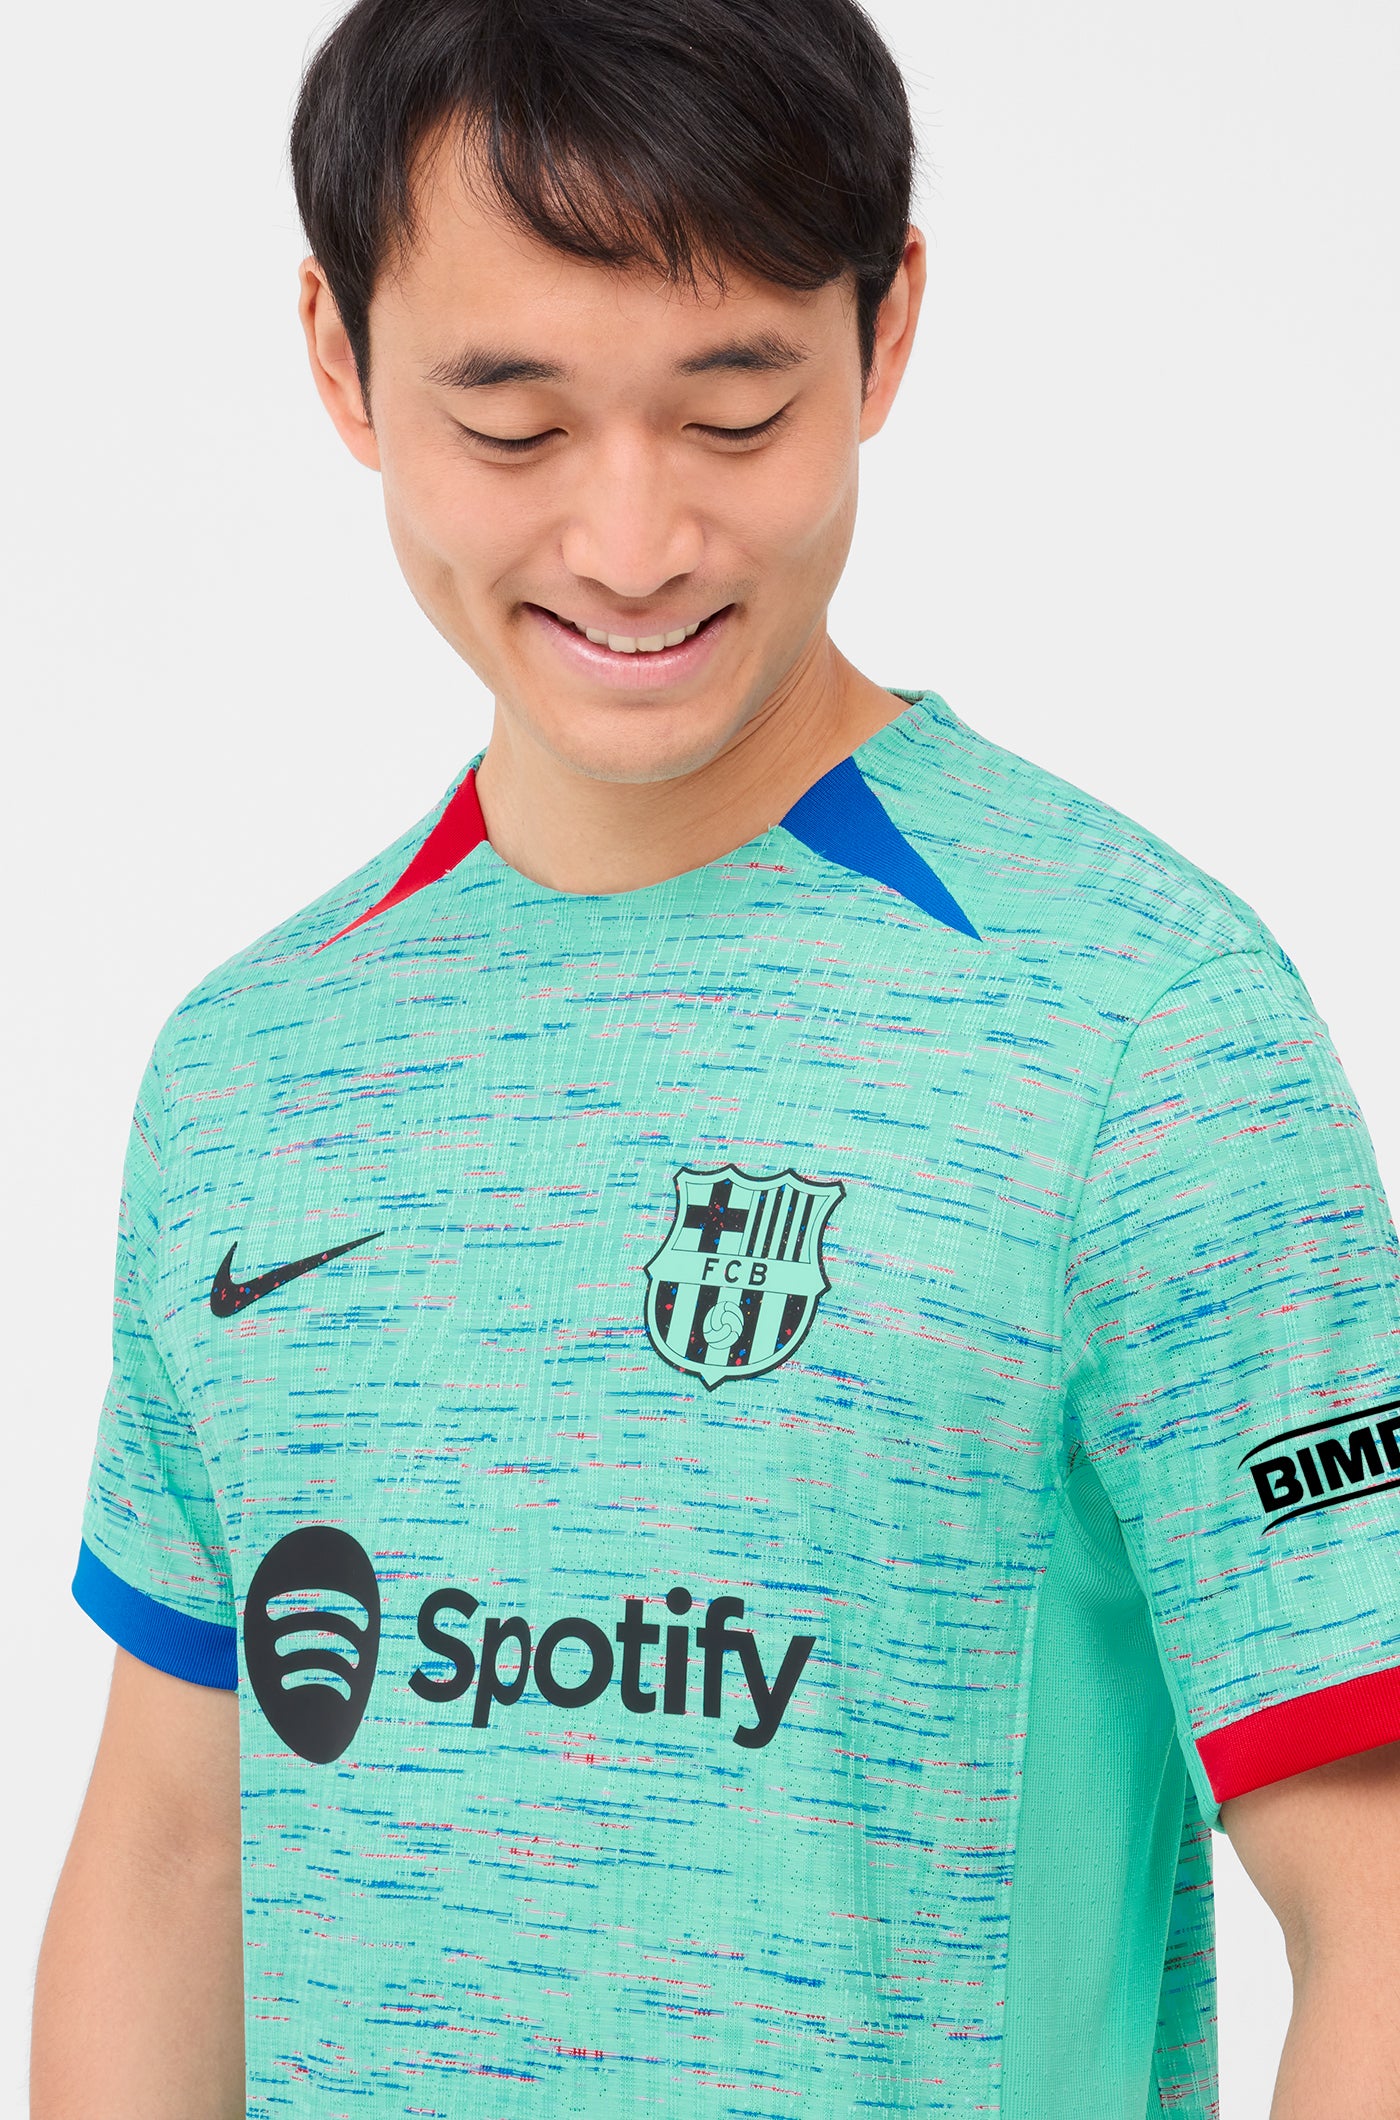 UWCL FC Barcelona third shirt 23/24 Player's Edition